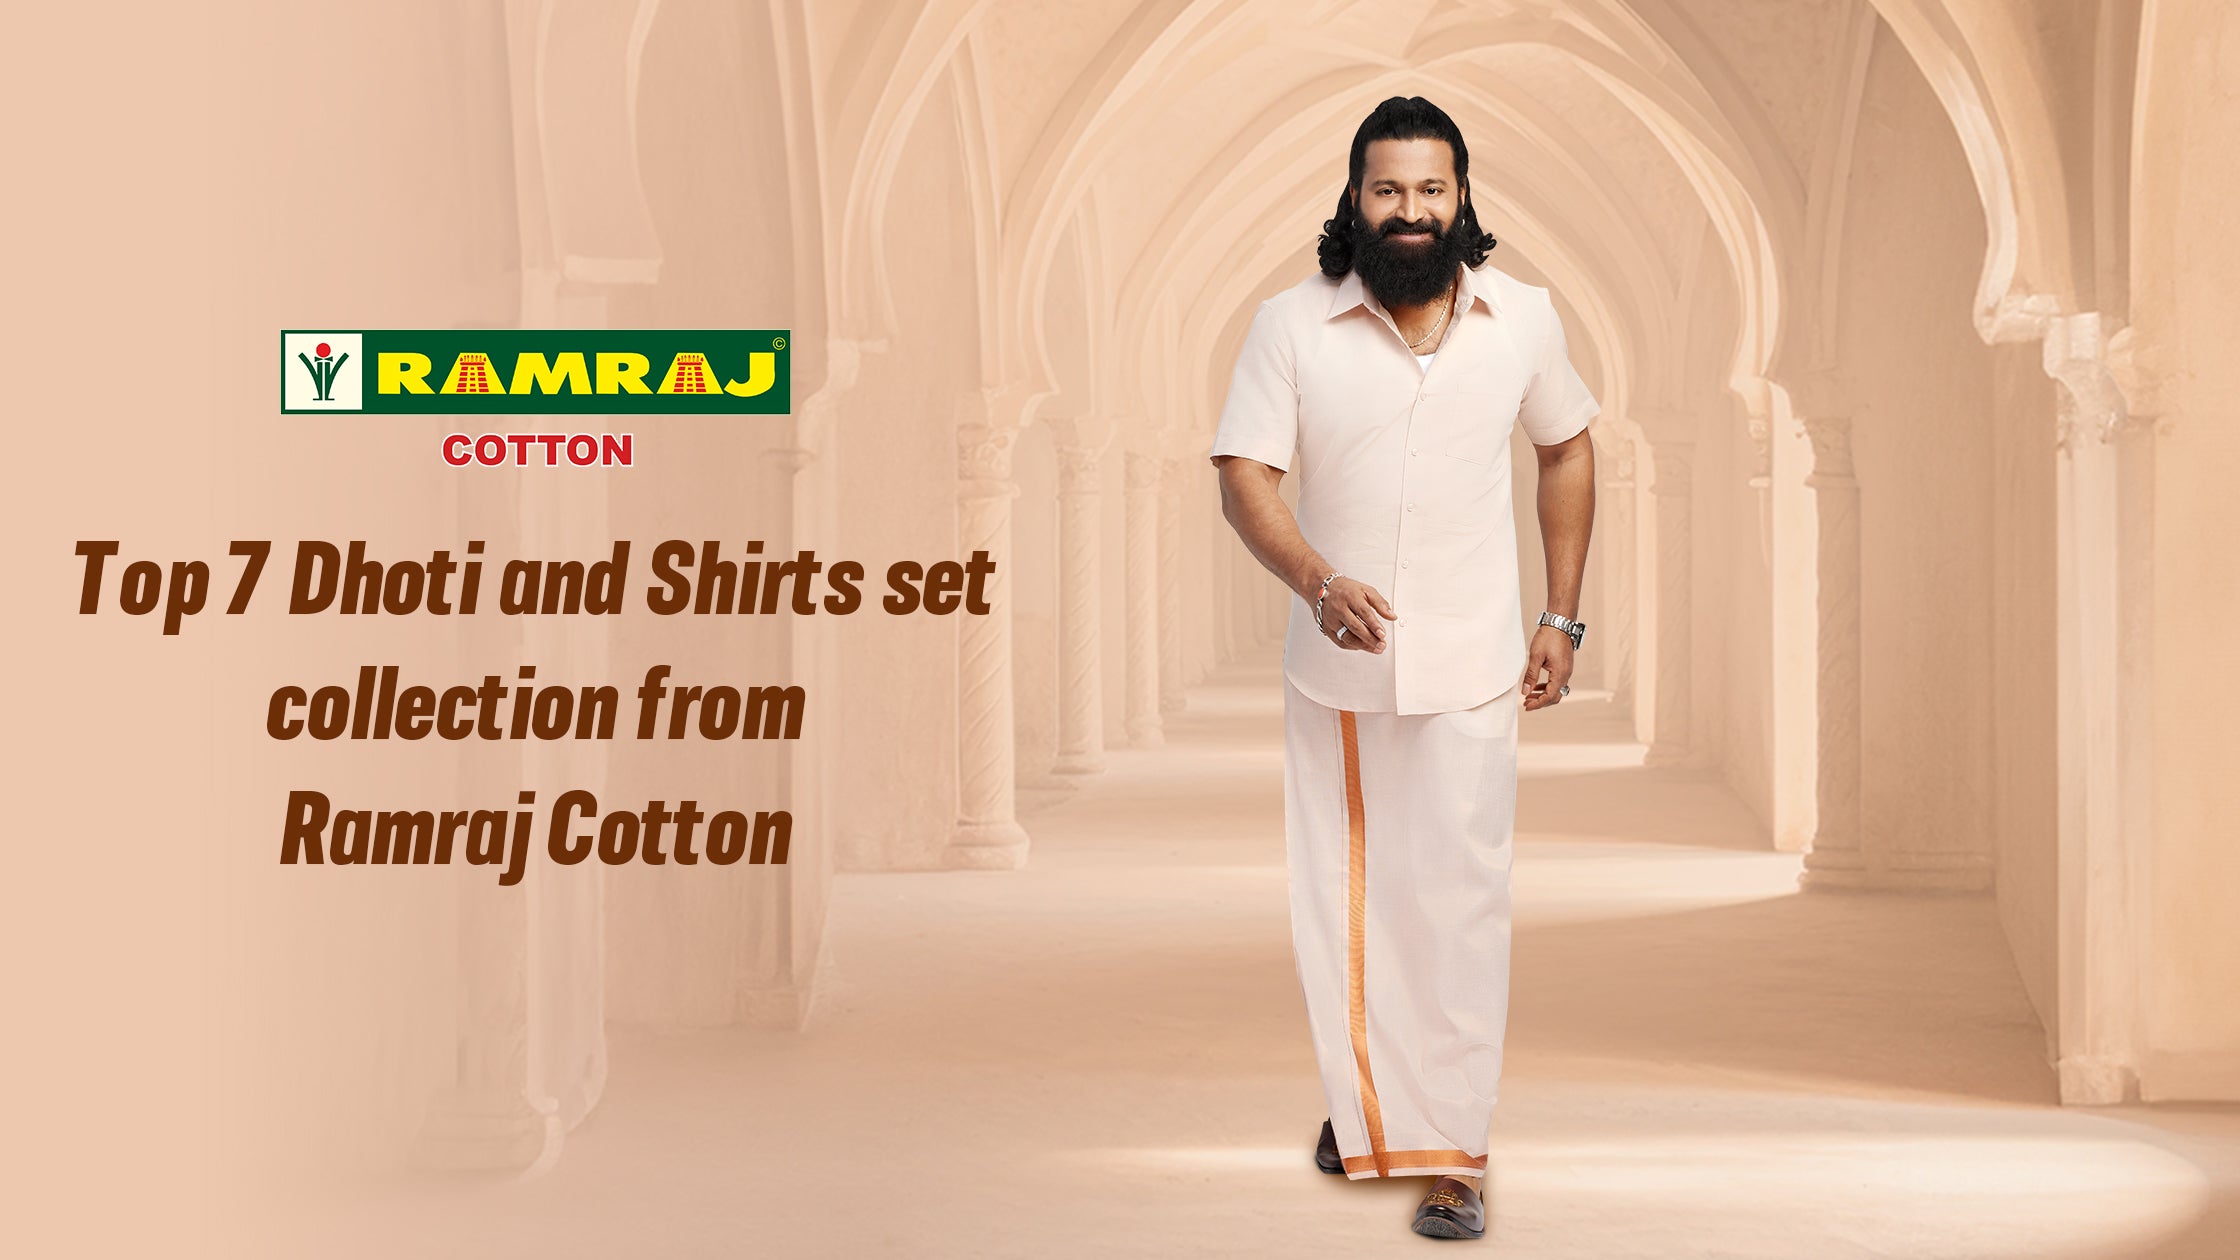 Top 7 dhoti and shirt set collection from Ramraj cotton